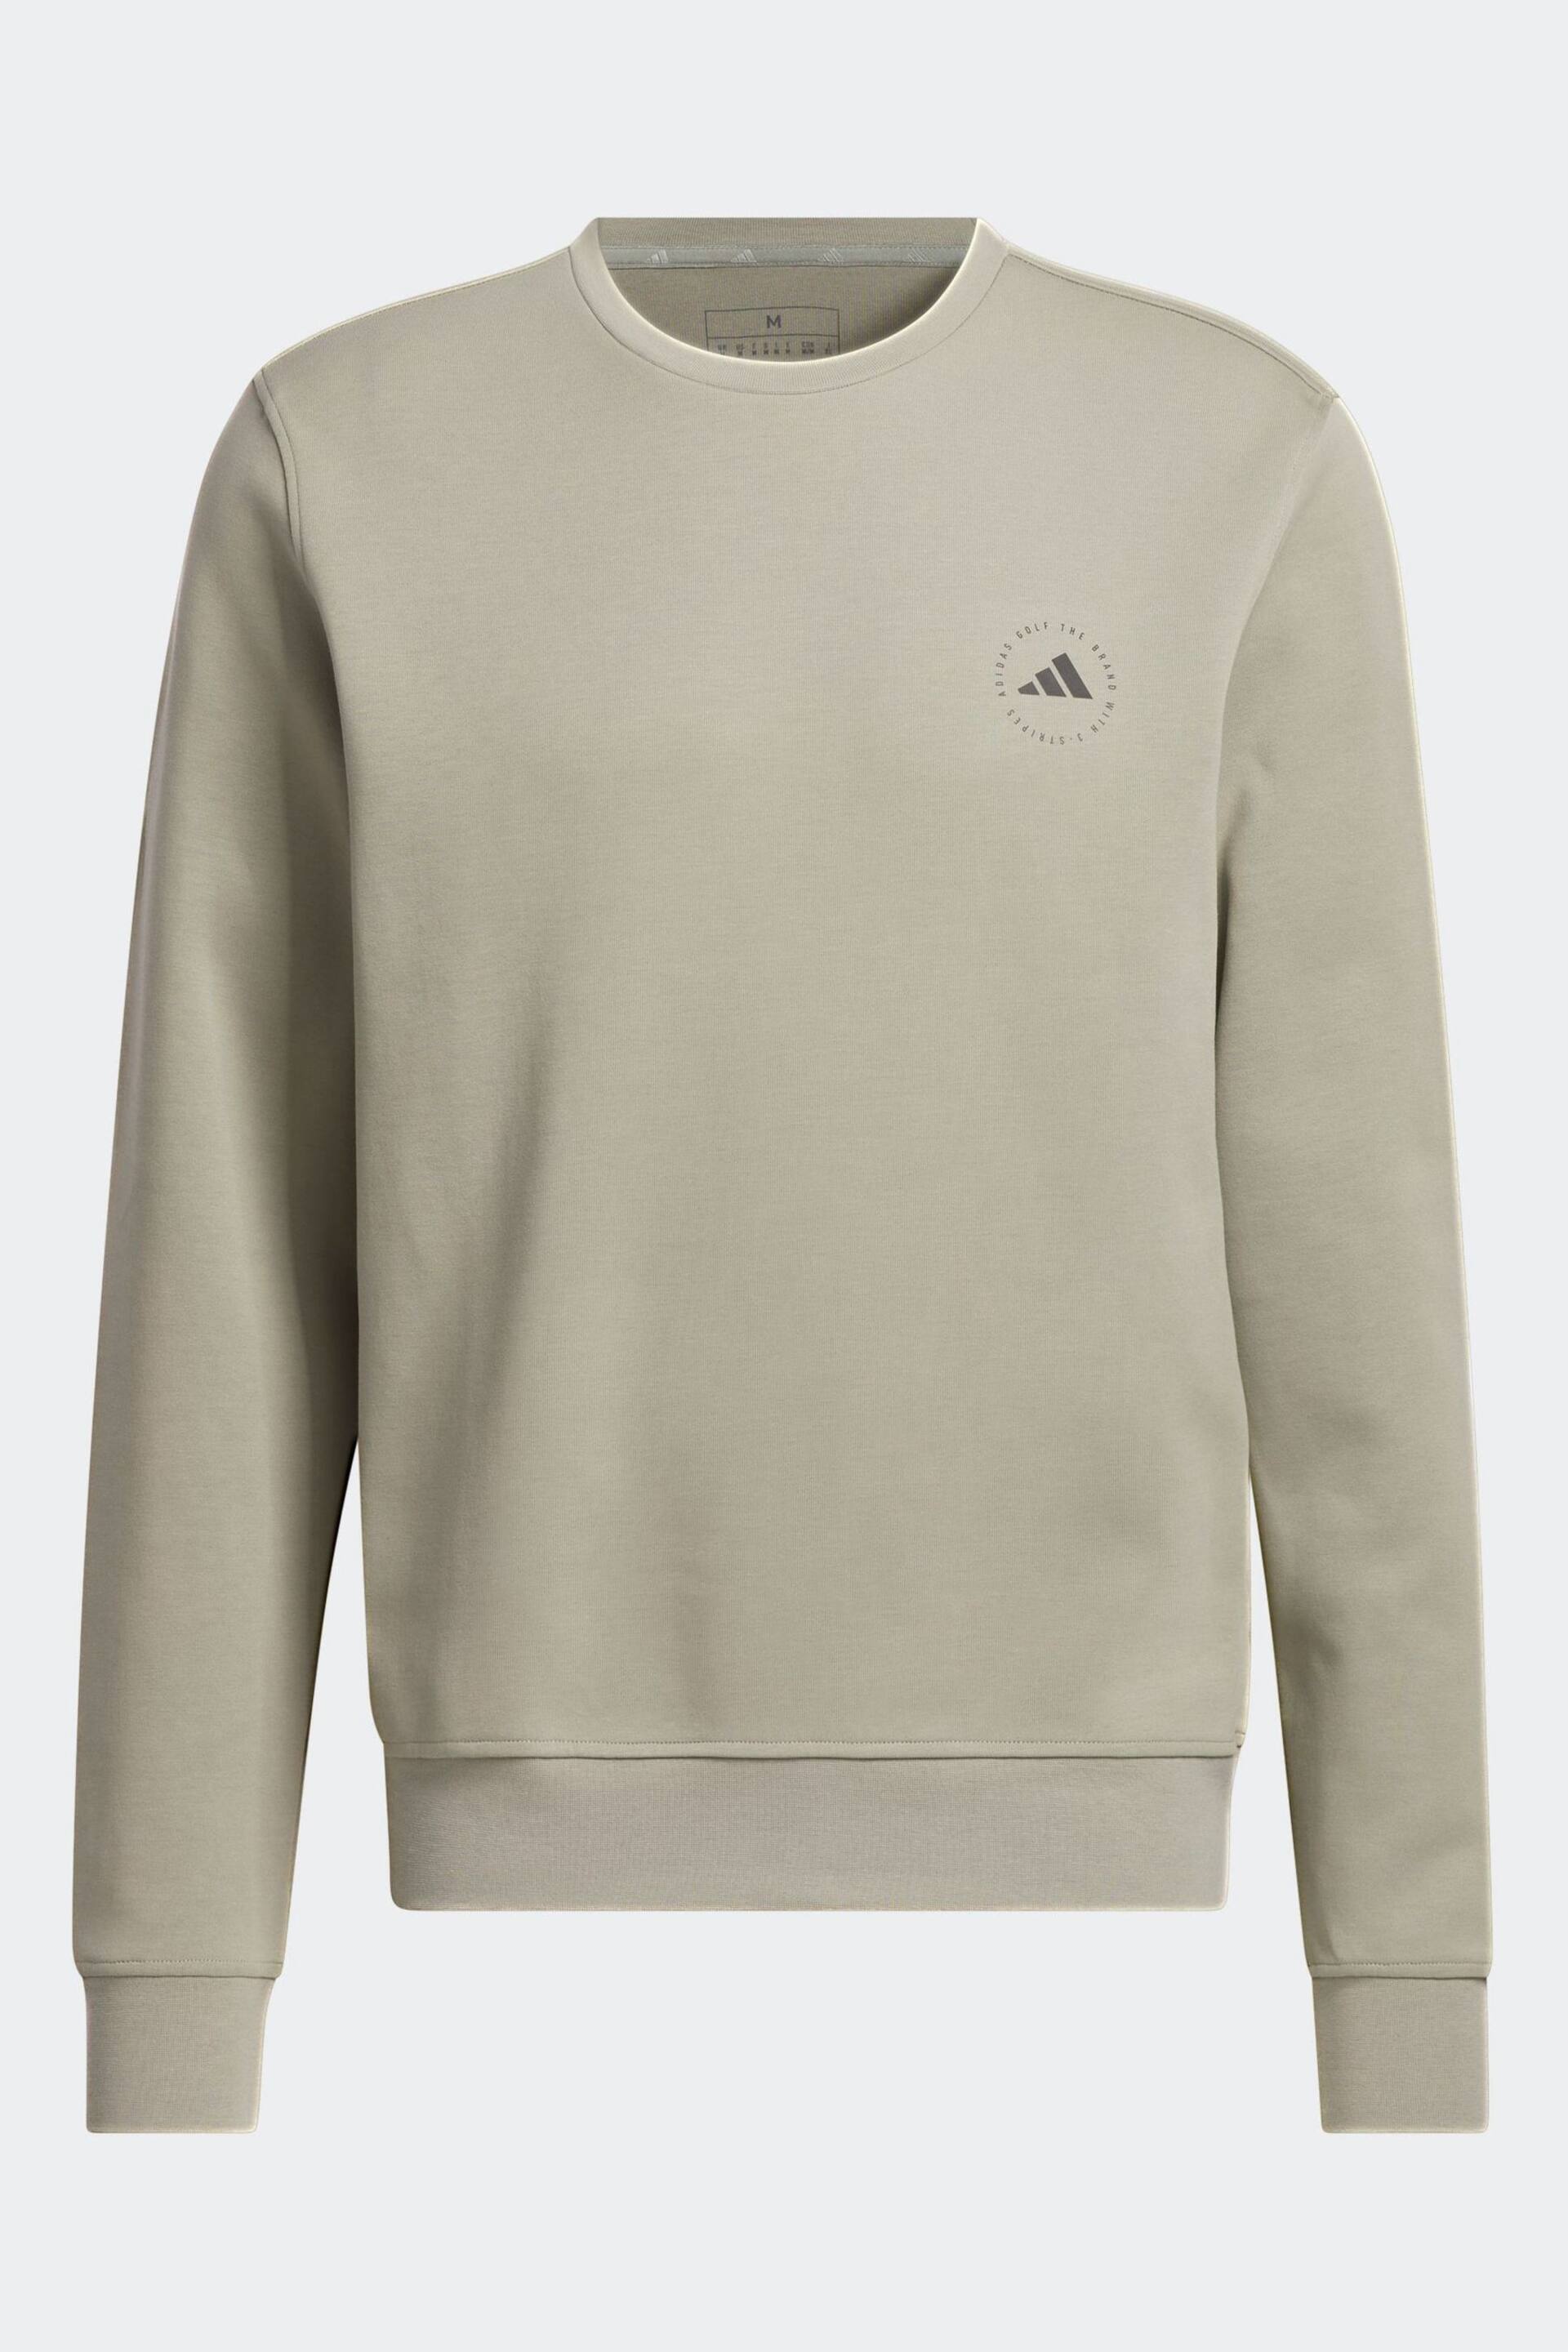 adidas Golf Pebble Crewneck Sweatshirt - Image 6 of 6